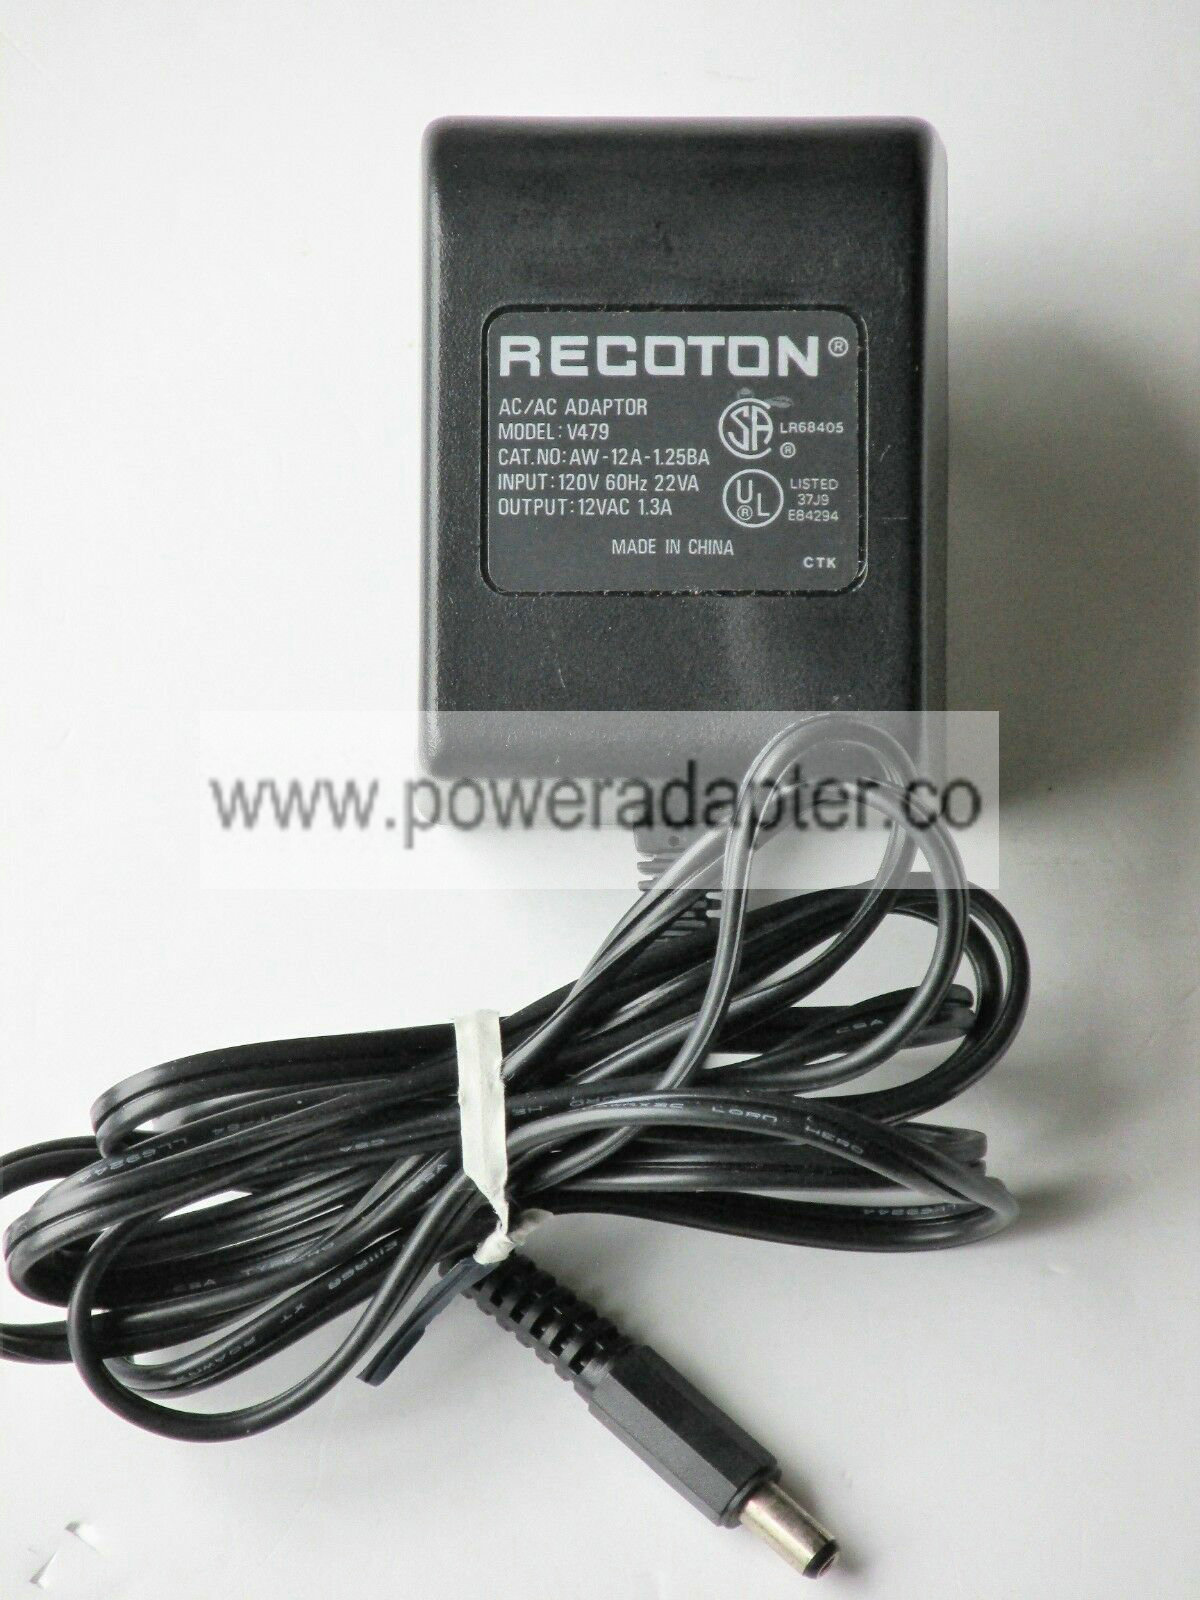 Recoton AC Adapter Power Supply #V479 - 120V 60Hz Recoton AC Adapter Power Supply - Model #V479 - 120V 60Hz Overall e